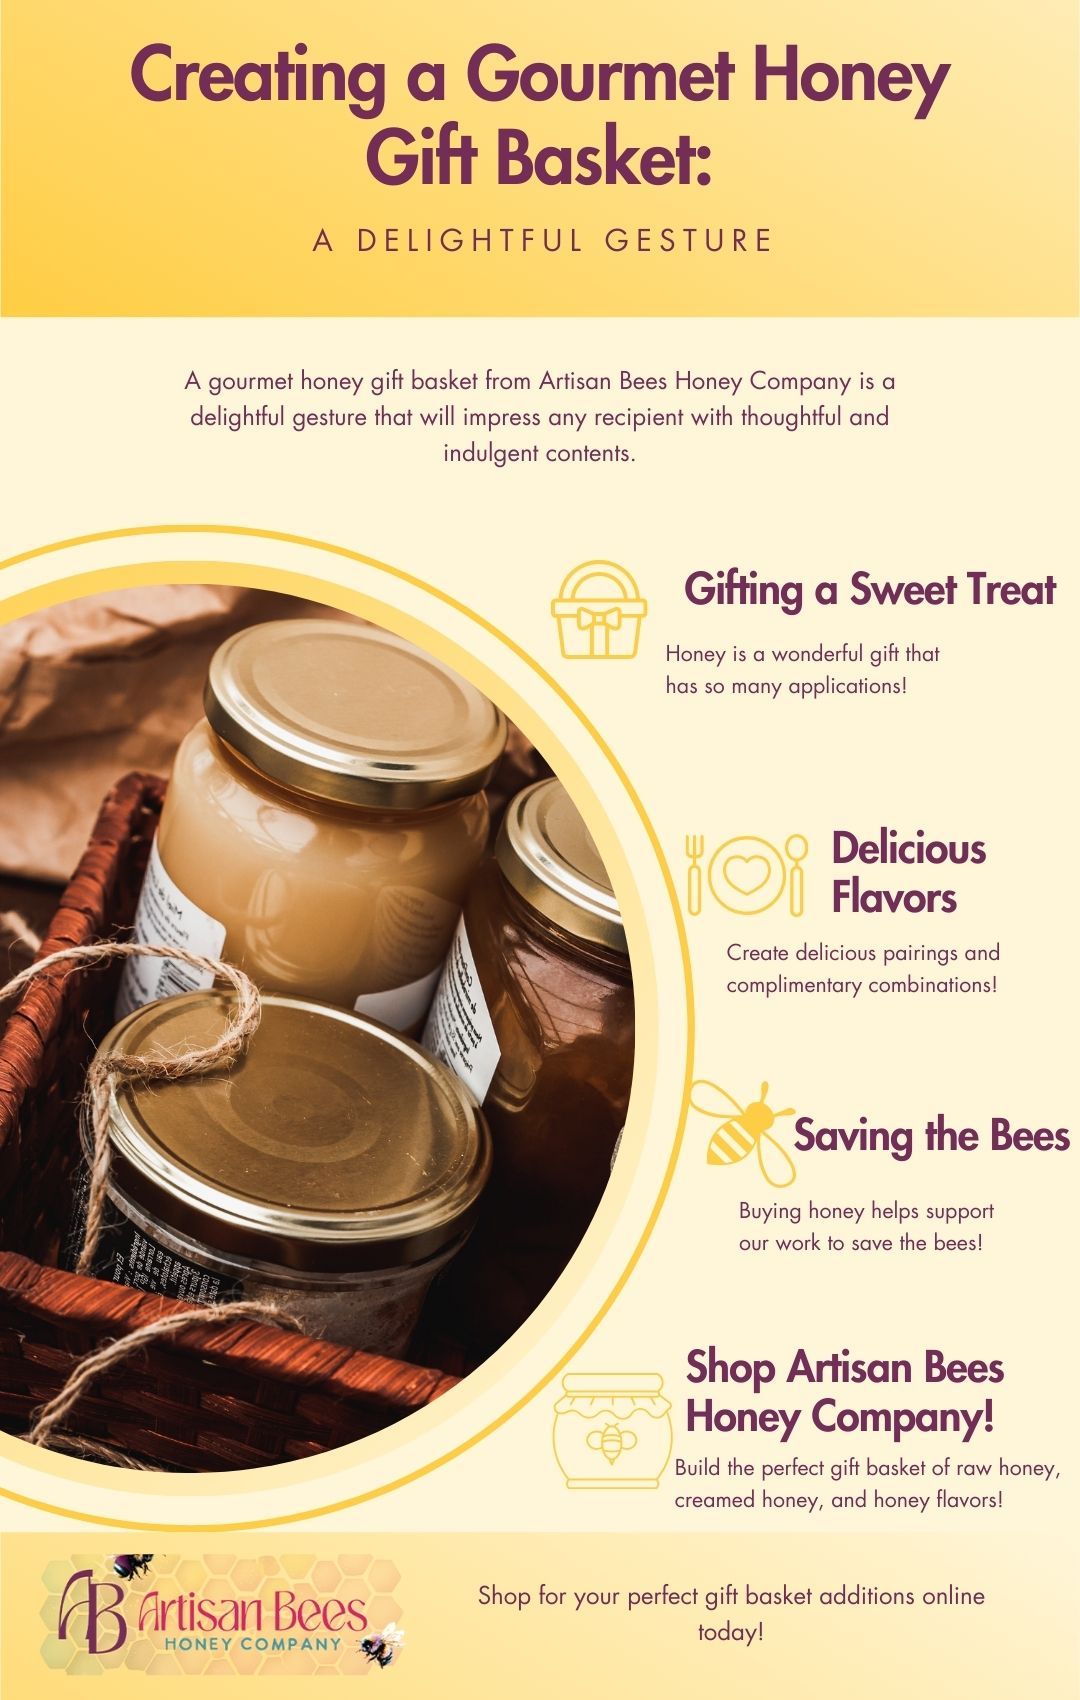 M42706 - Creating a Gourmet Honey Gift Basket A Delightful Gesture.jpg